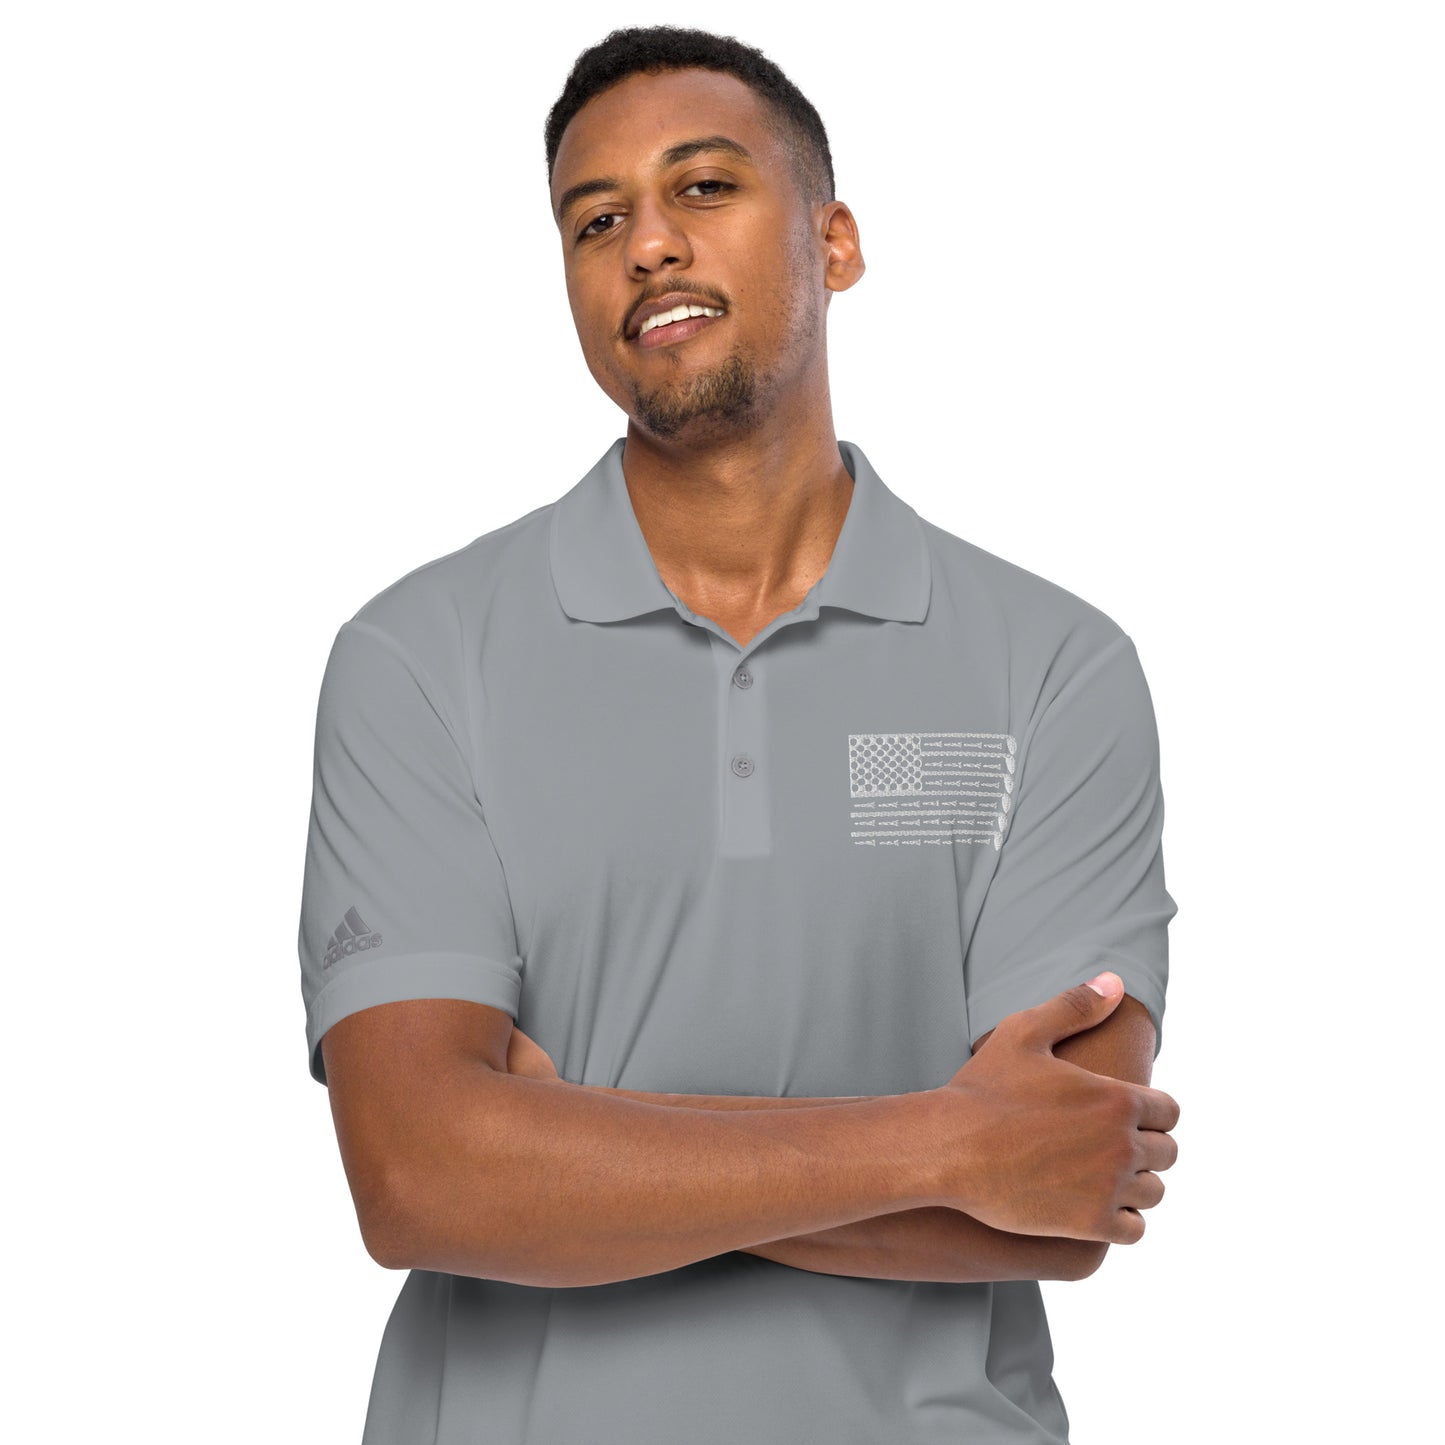 Adidas 'American Flag Golf' Performance Polo Shirt